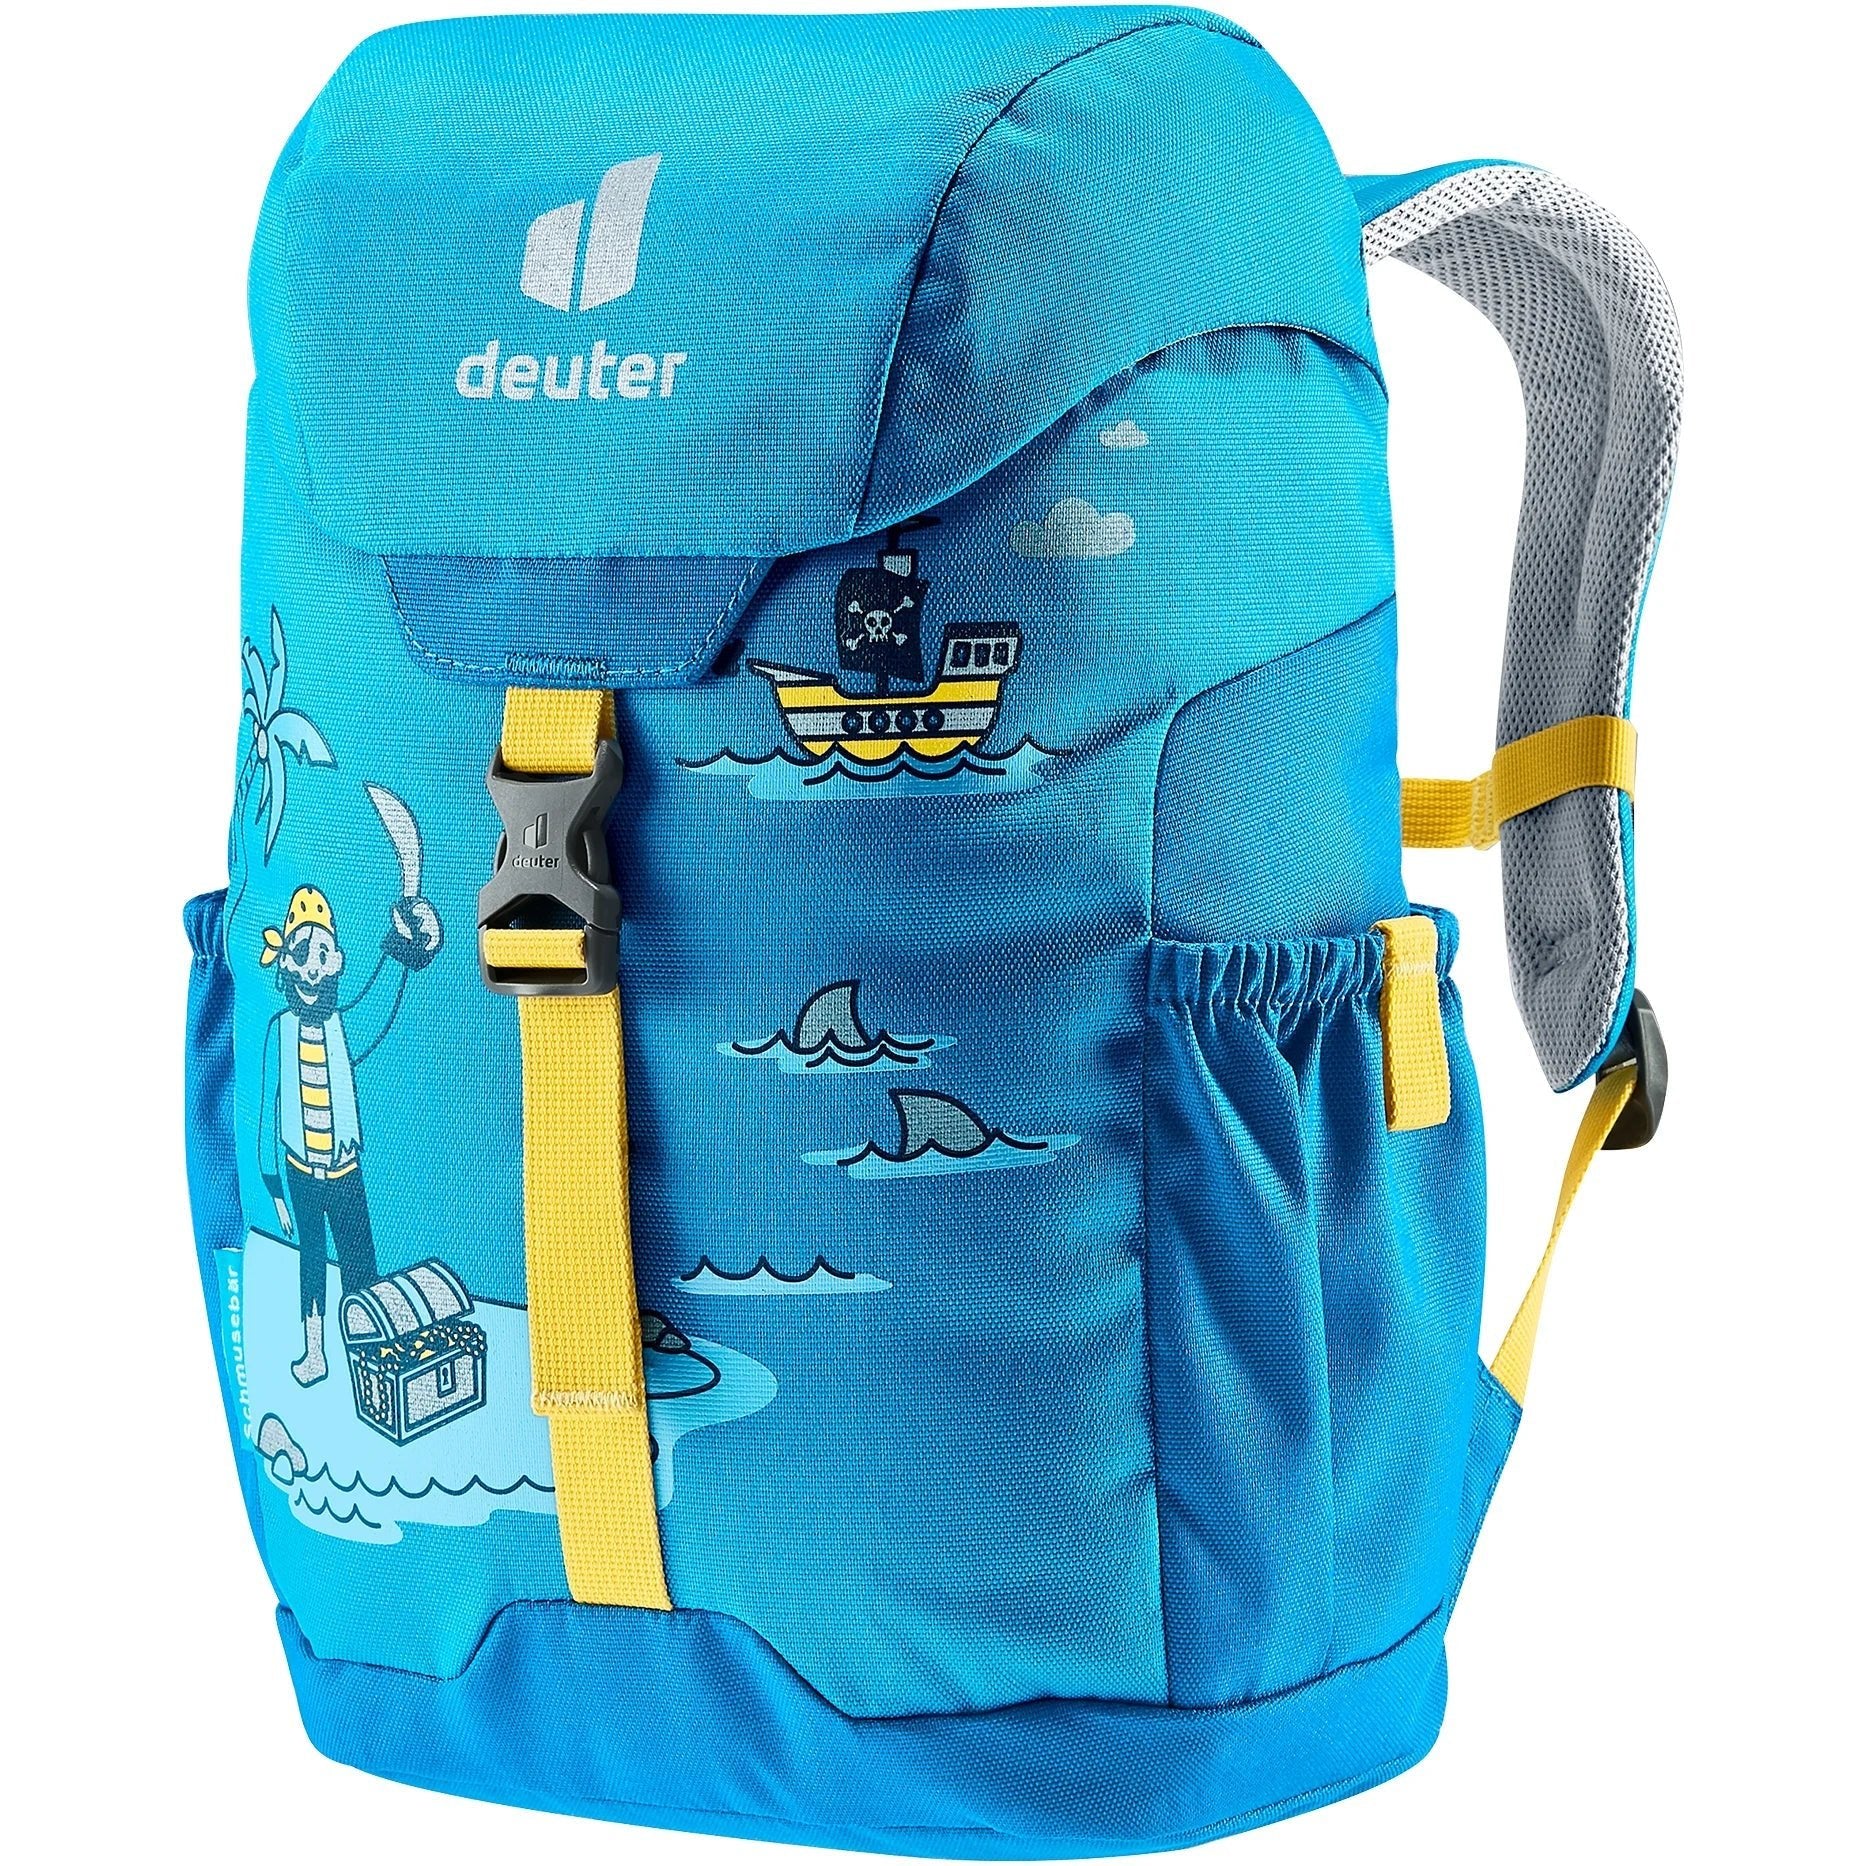 Deuter Daypack Schmusebär children's backpack 33 cm - Azure-Lapis